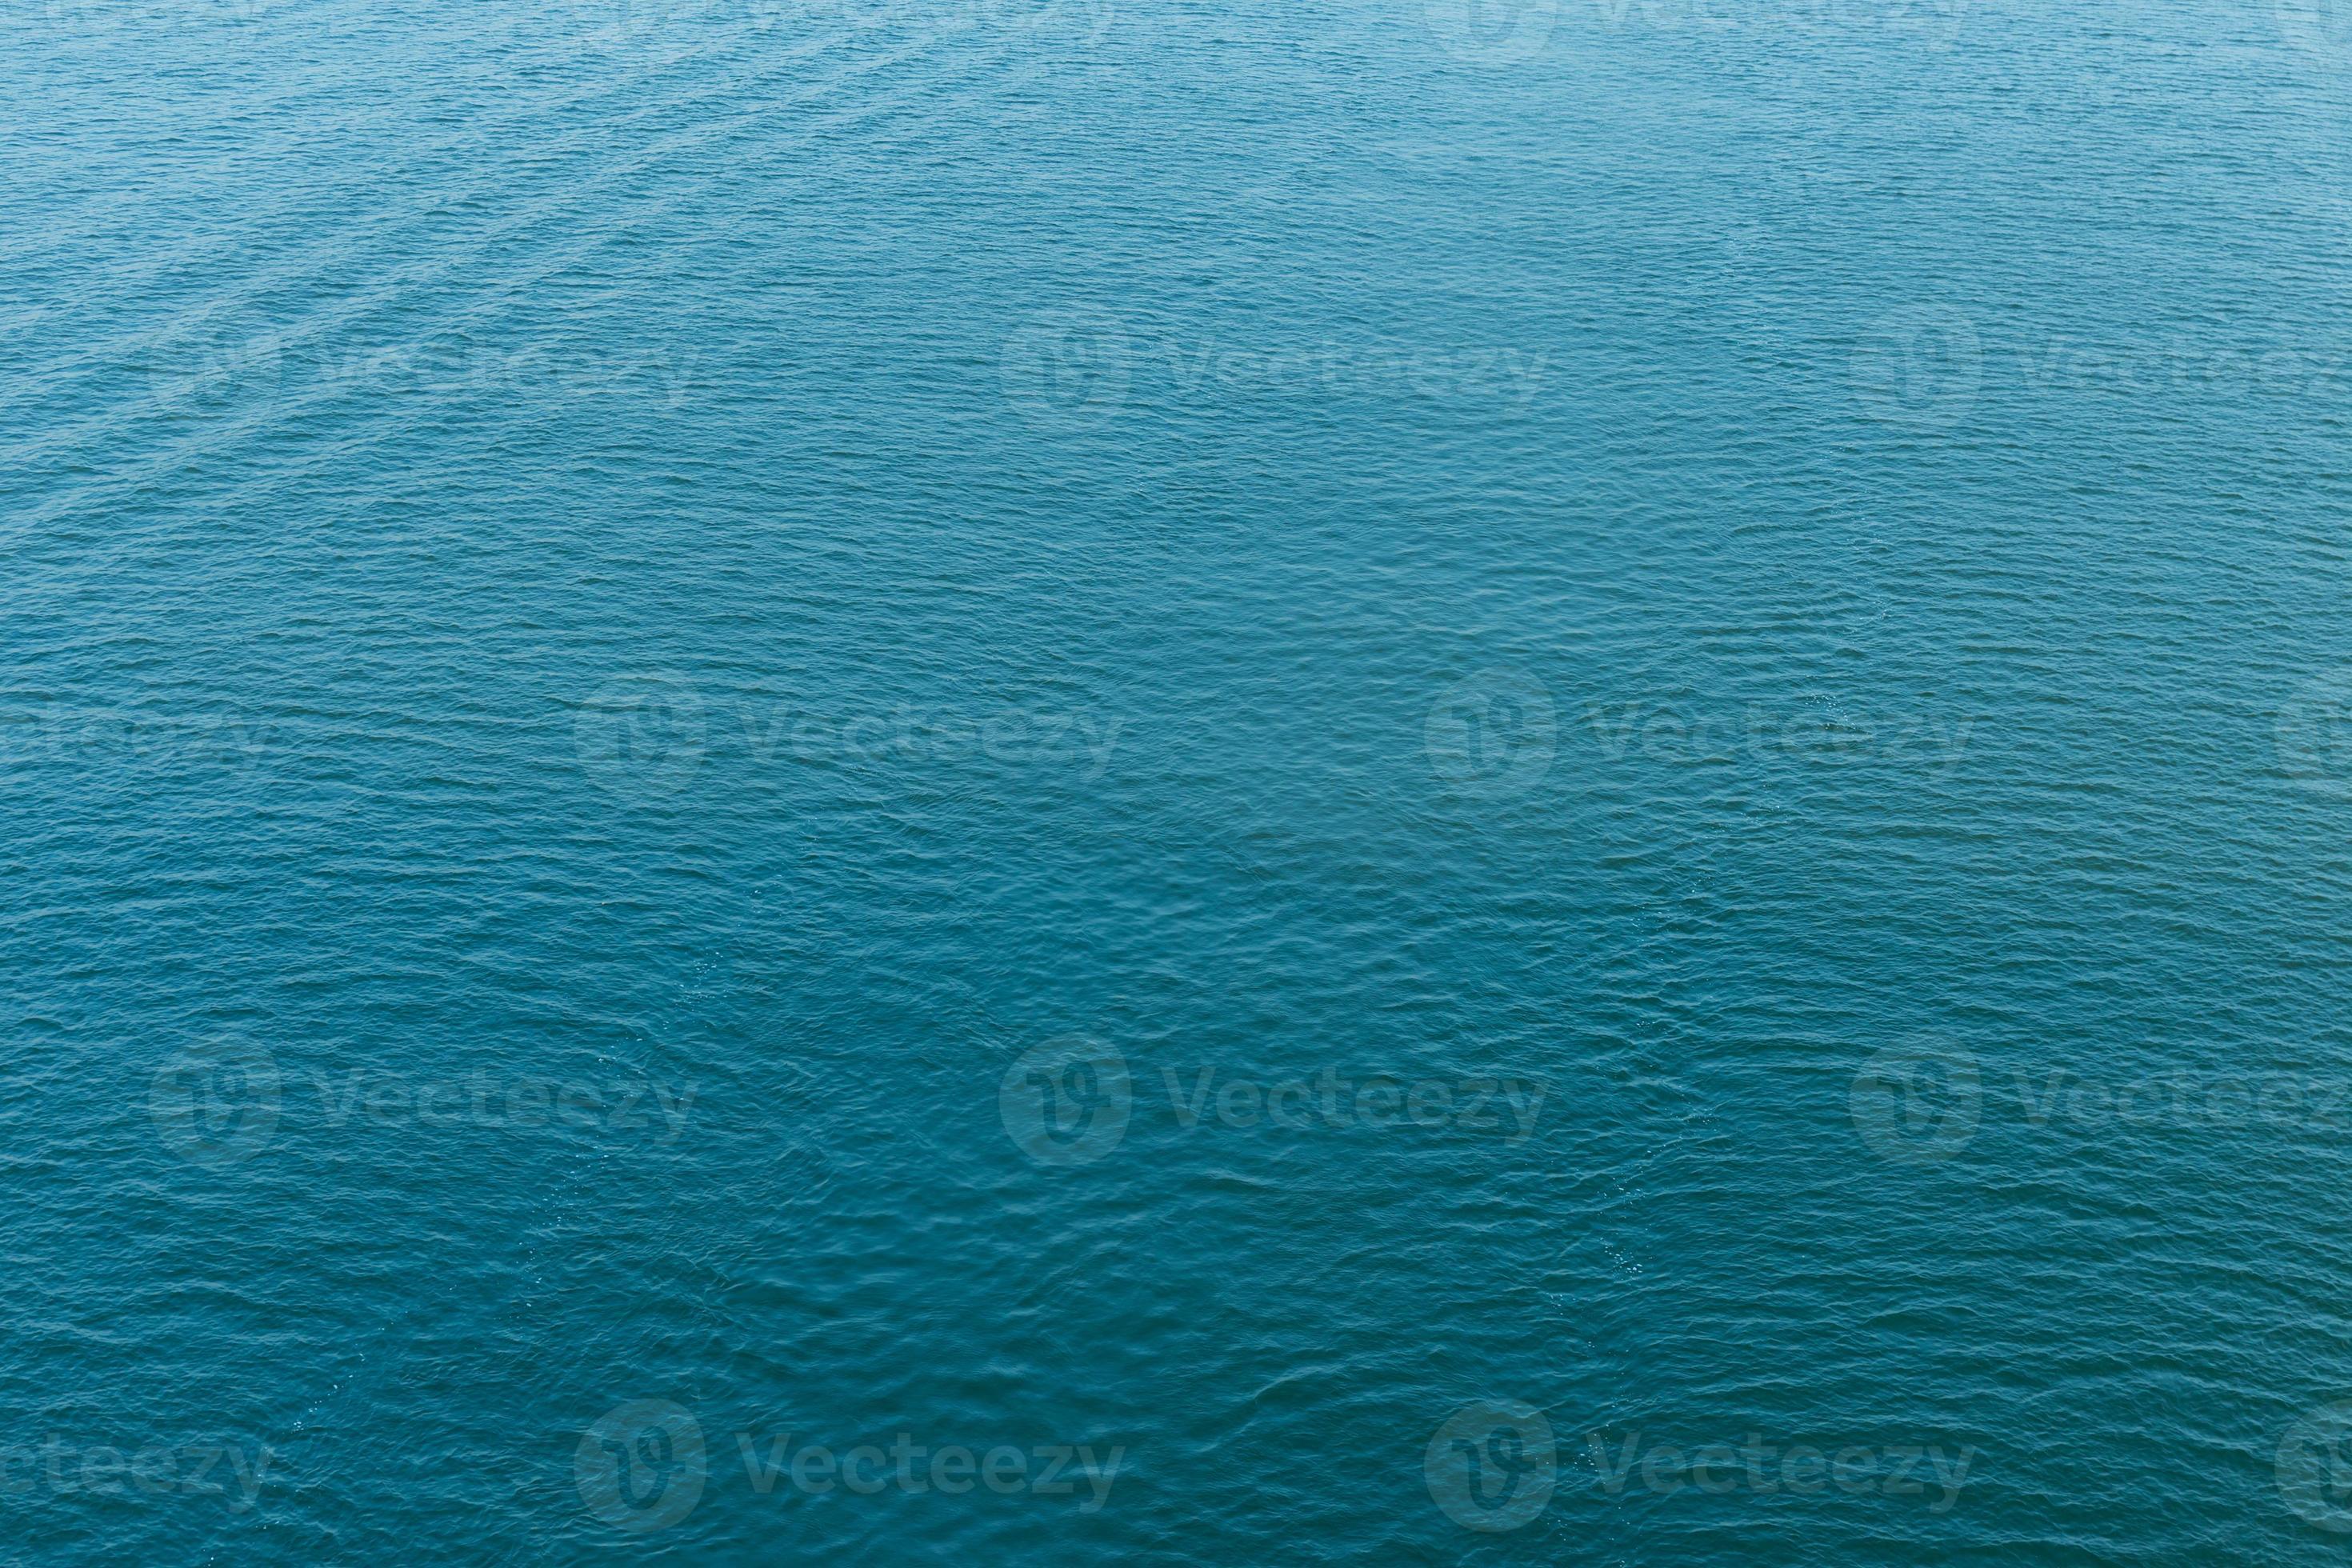 Ripple on water surface photo